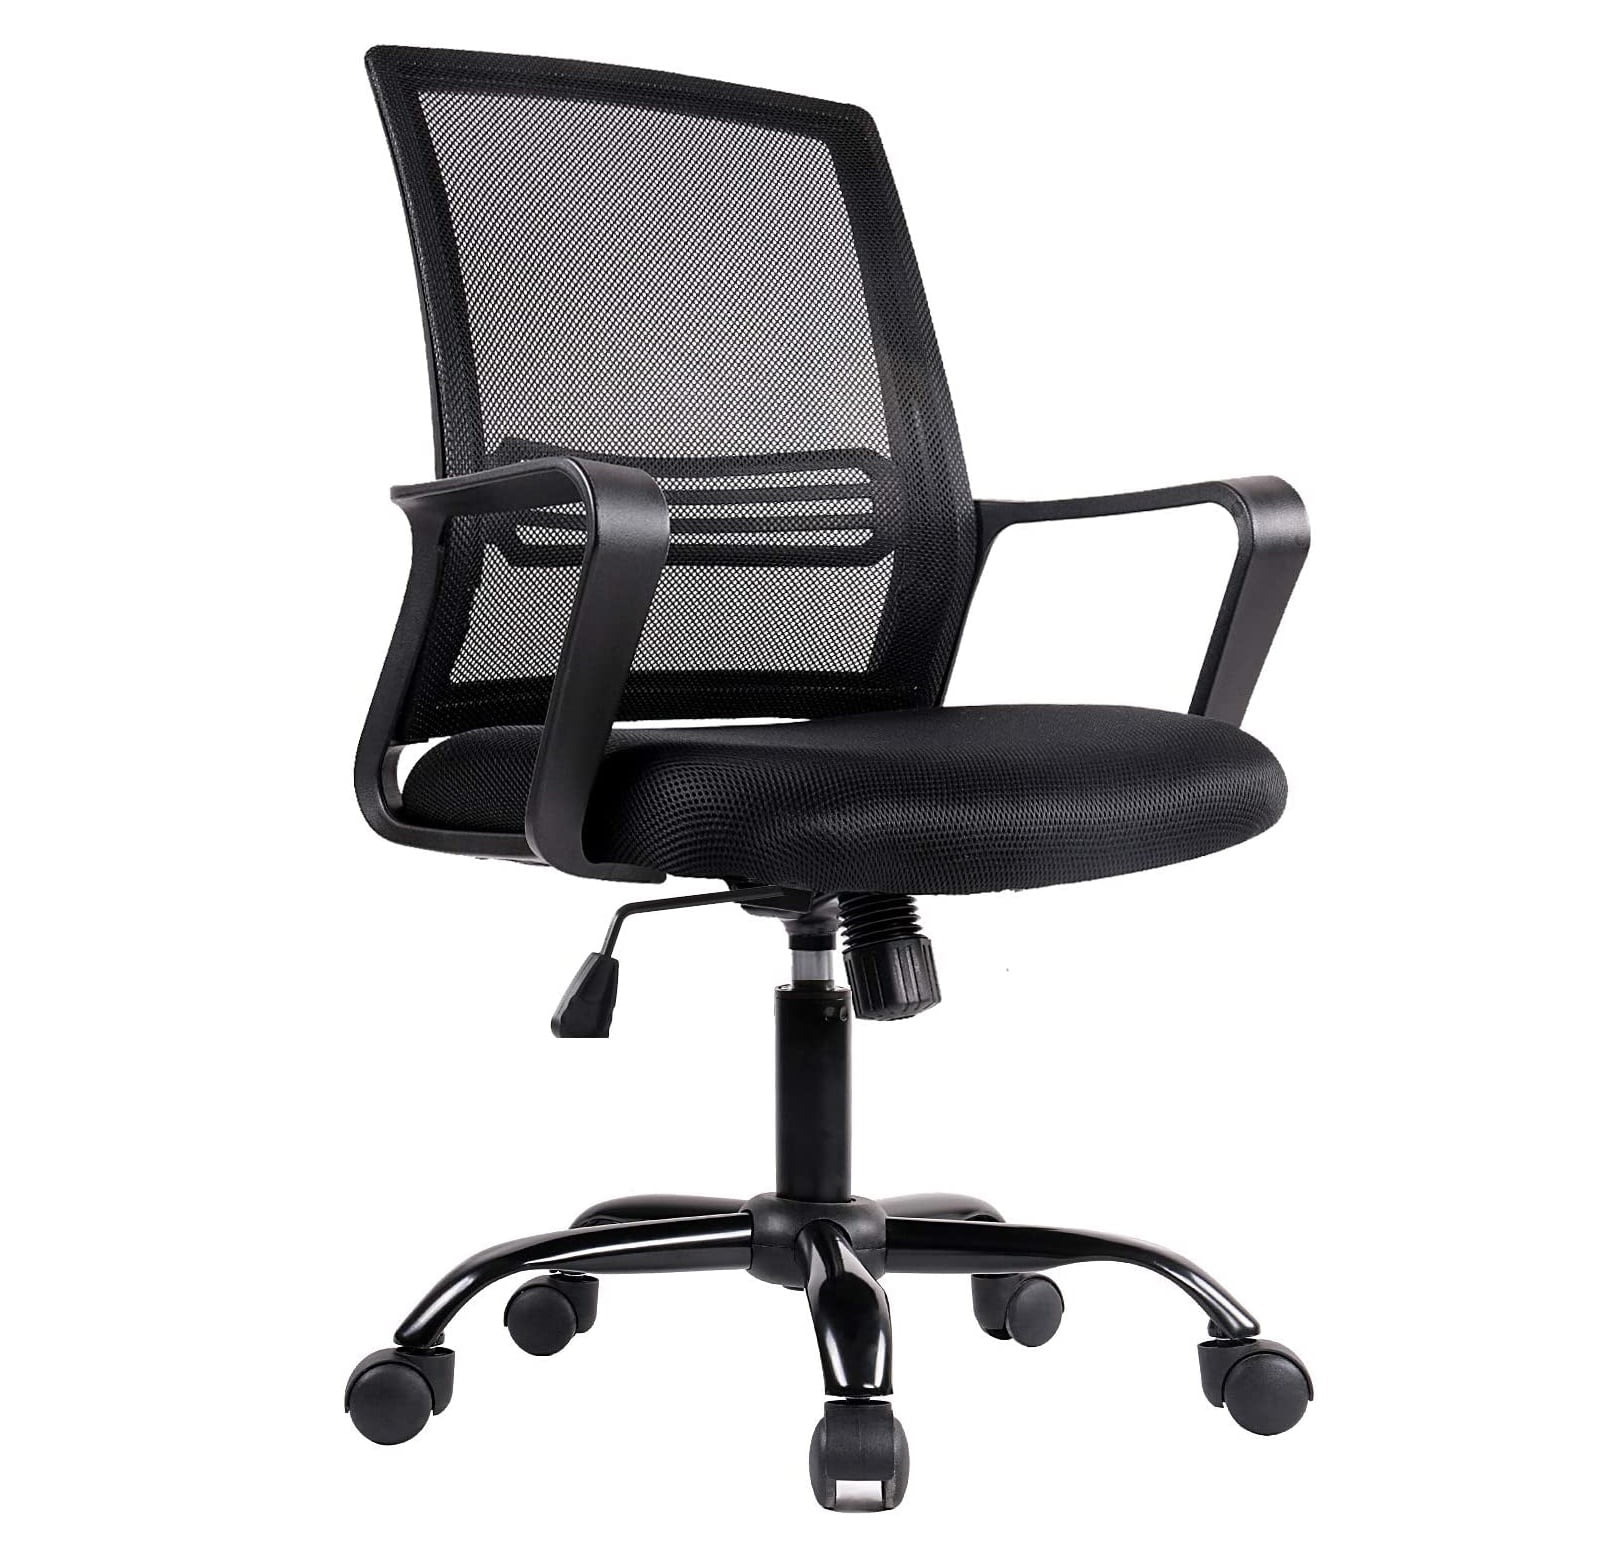 SMUGDESK 250 lb Office Chair, Ergonomic Desk Chair Adjustable Arms Mesh